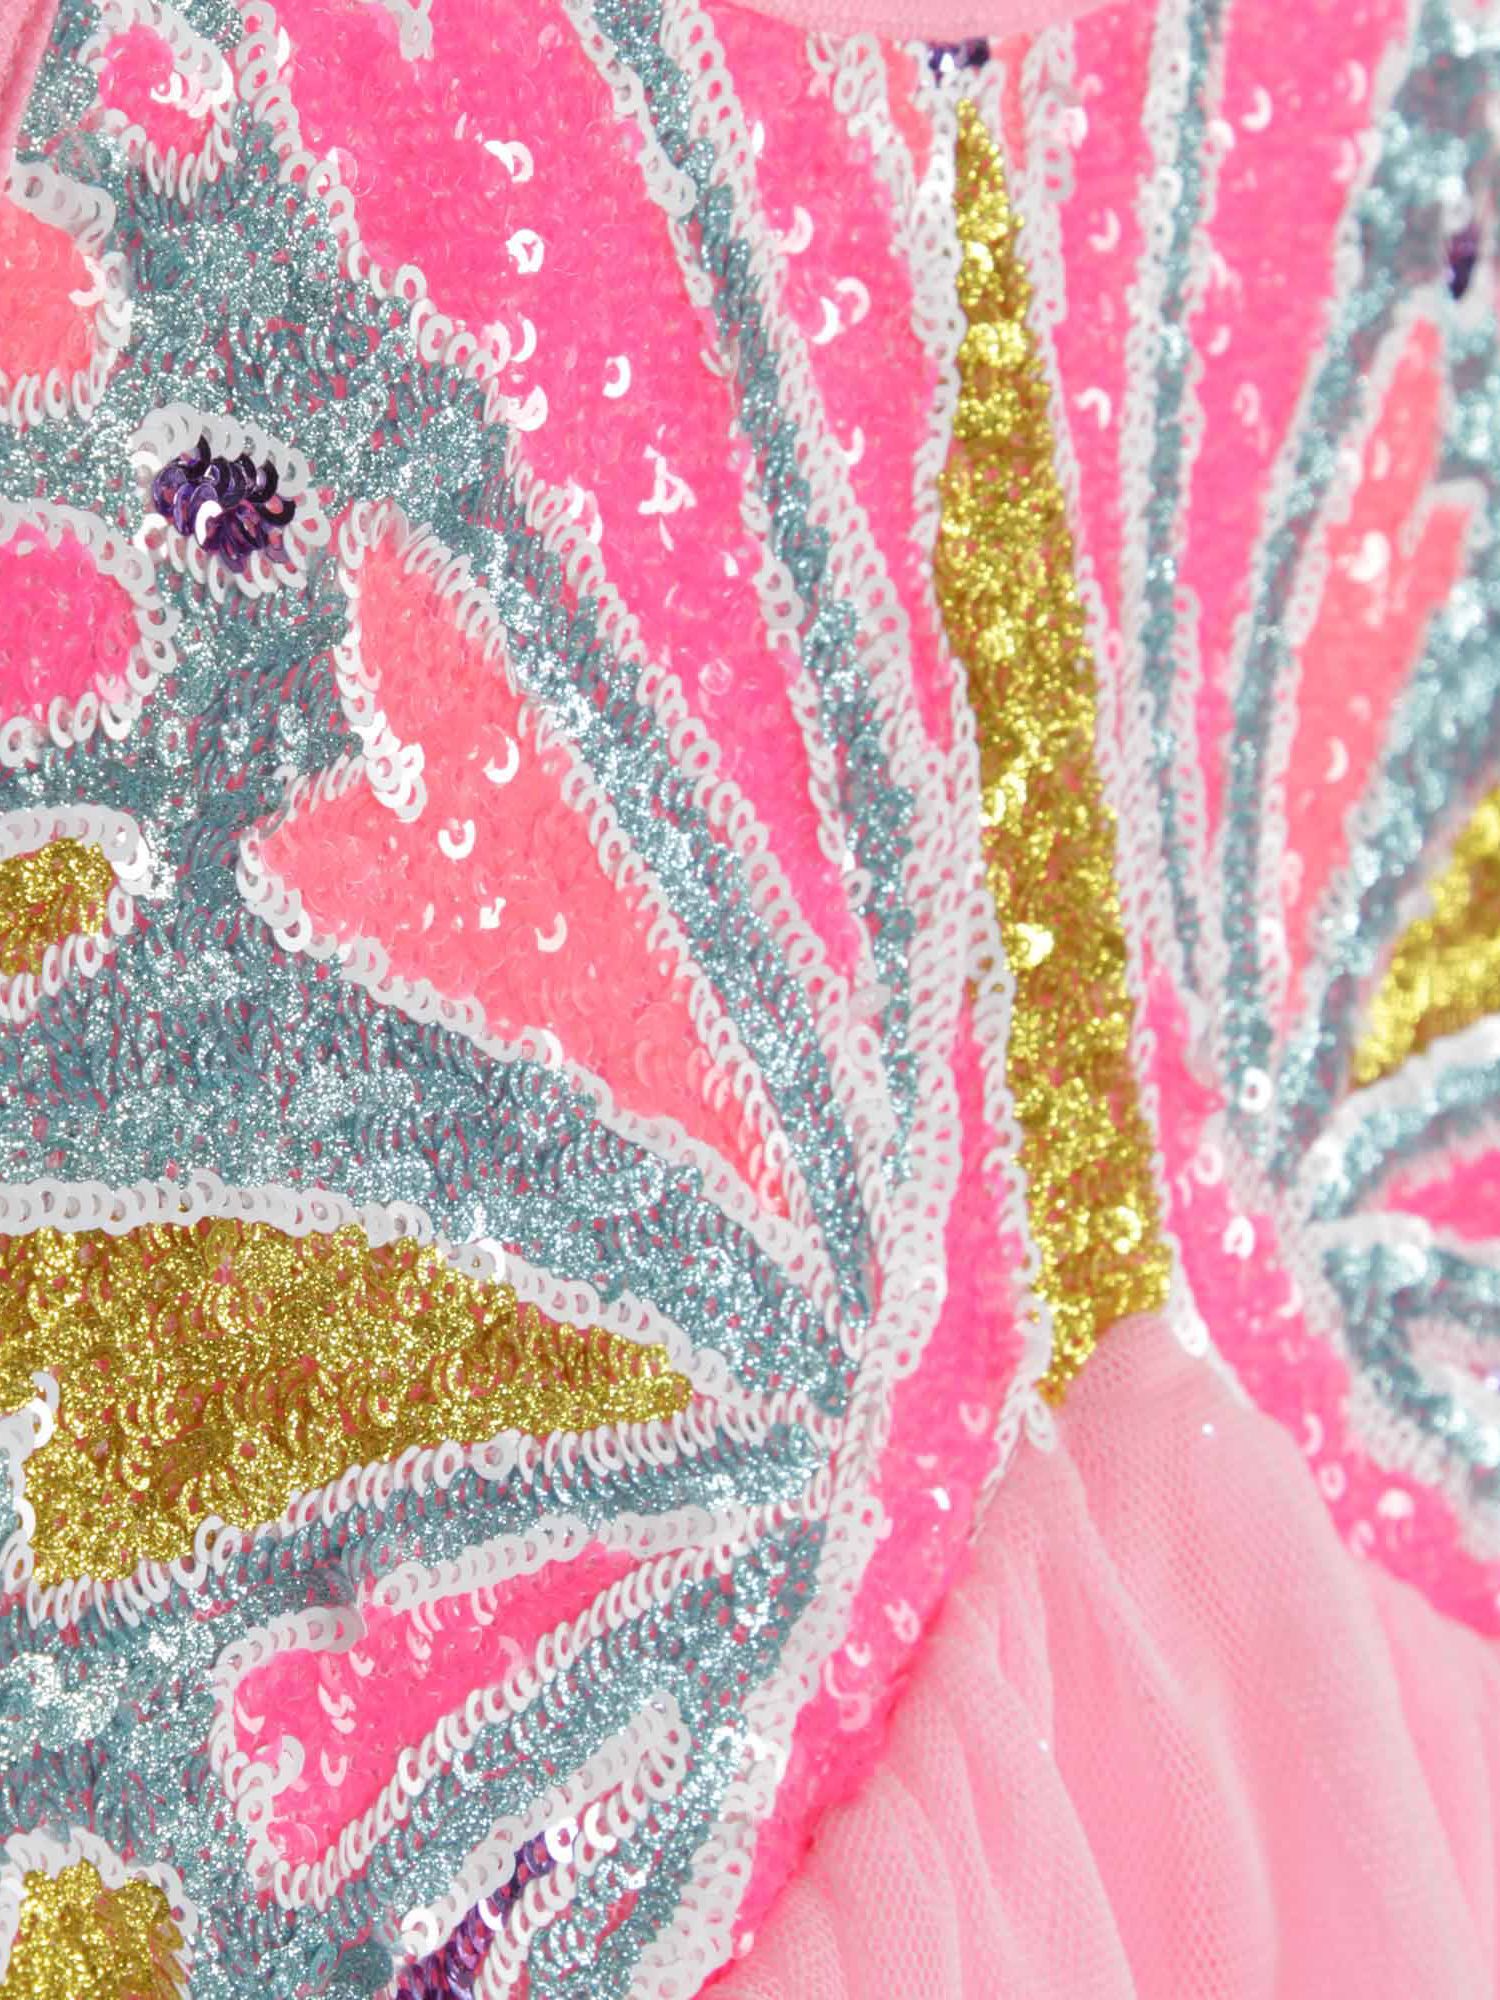 Buy Billieblush Kids' Sleeveless Dress, Pink Online at johnlewis.com